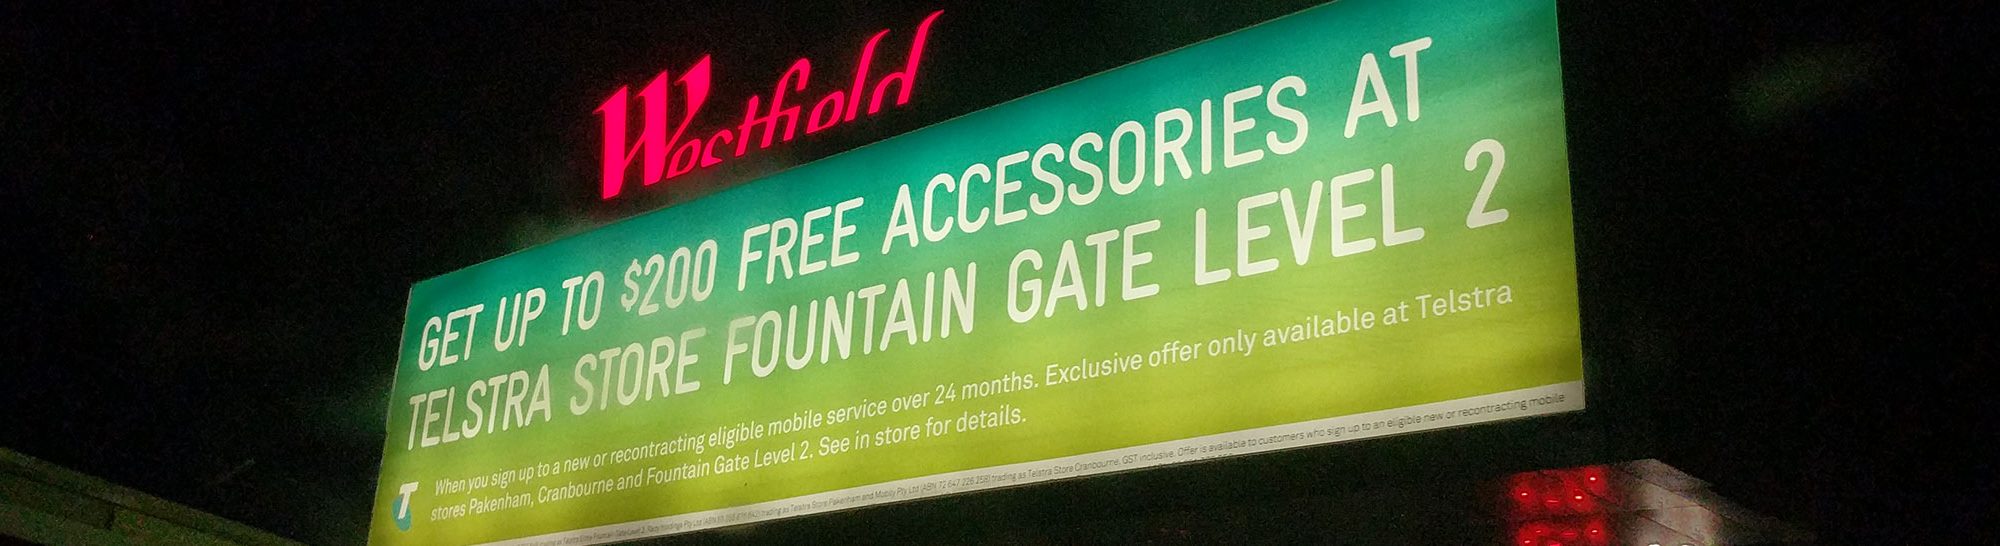 Billboard for Telstra Store Fountain Gate Level 2